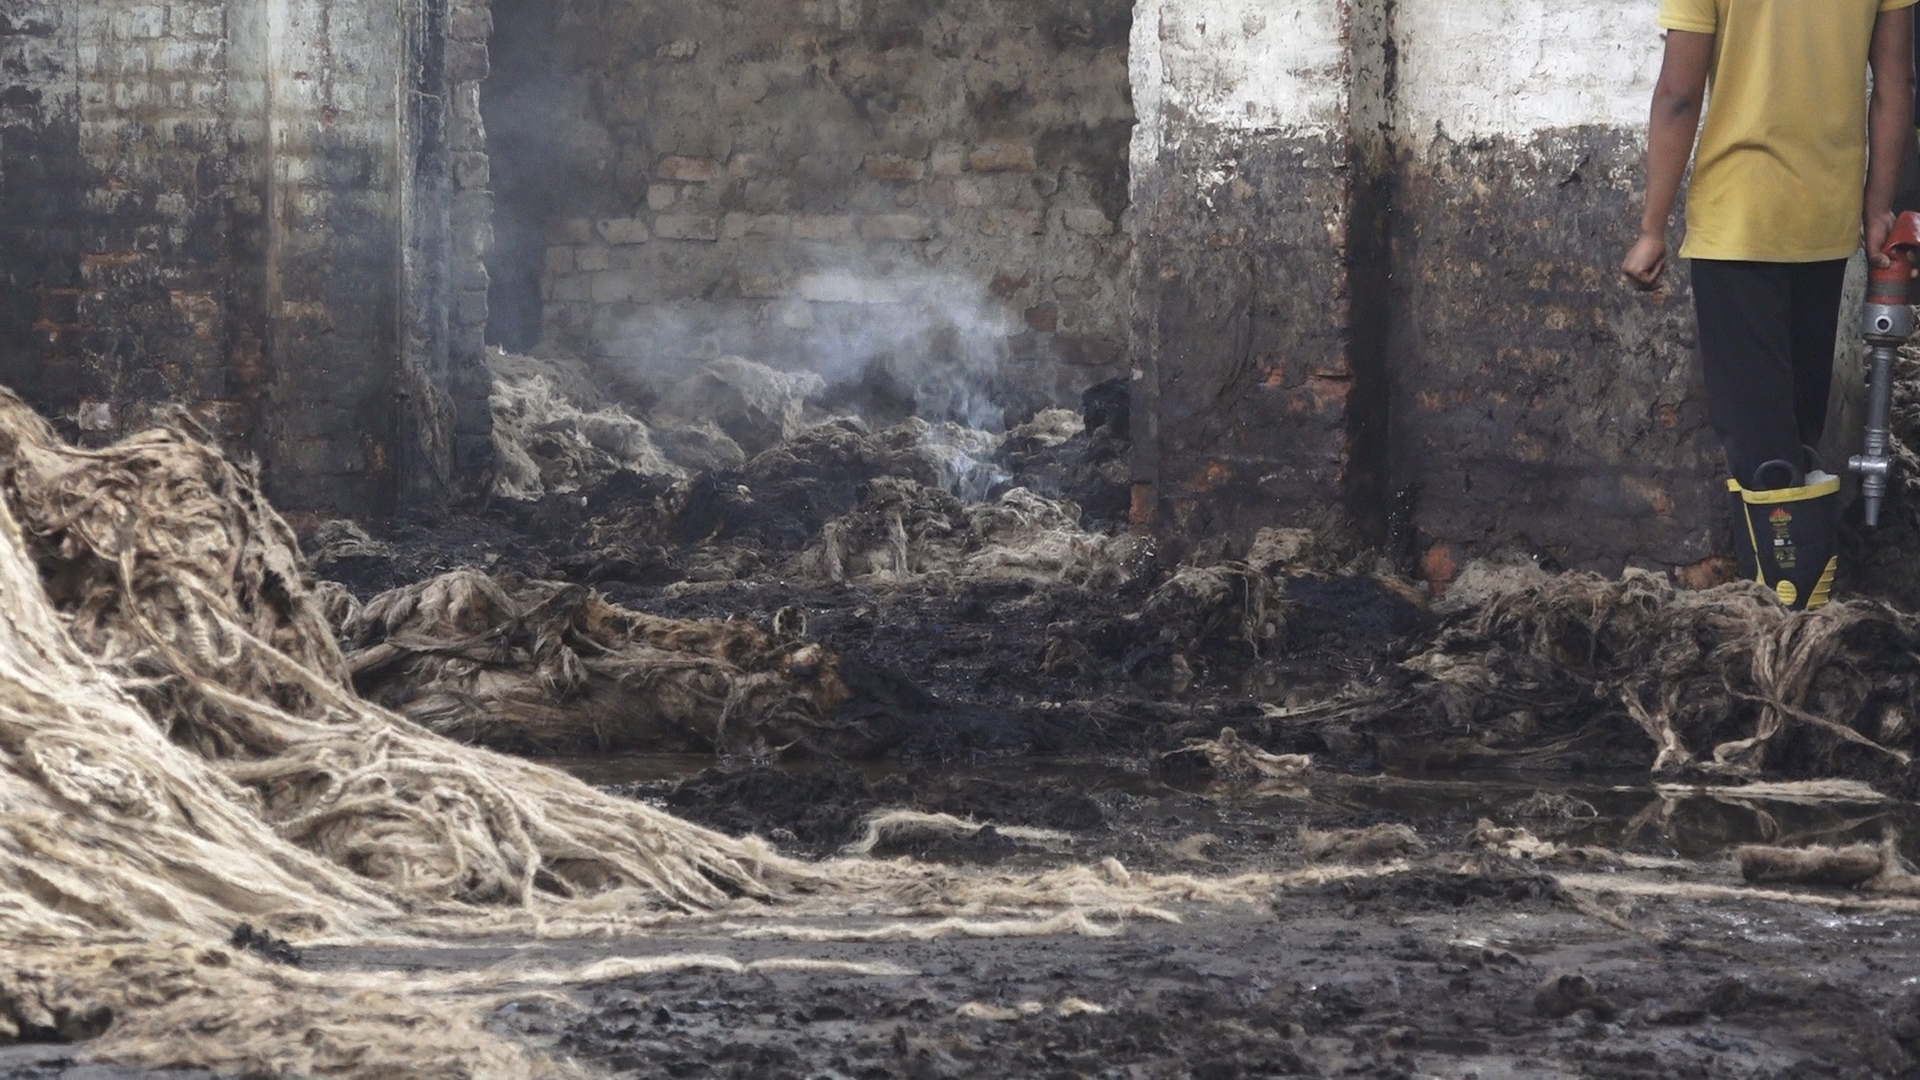 Suspicion surrounds fire at Biratnagar Jute Mills, causes damage worth 2 million